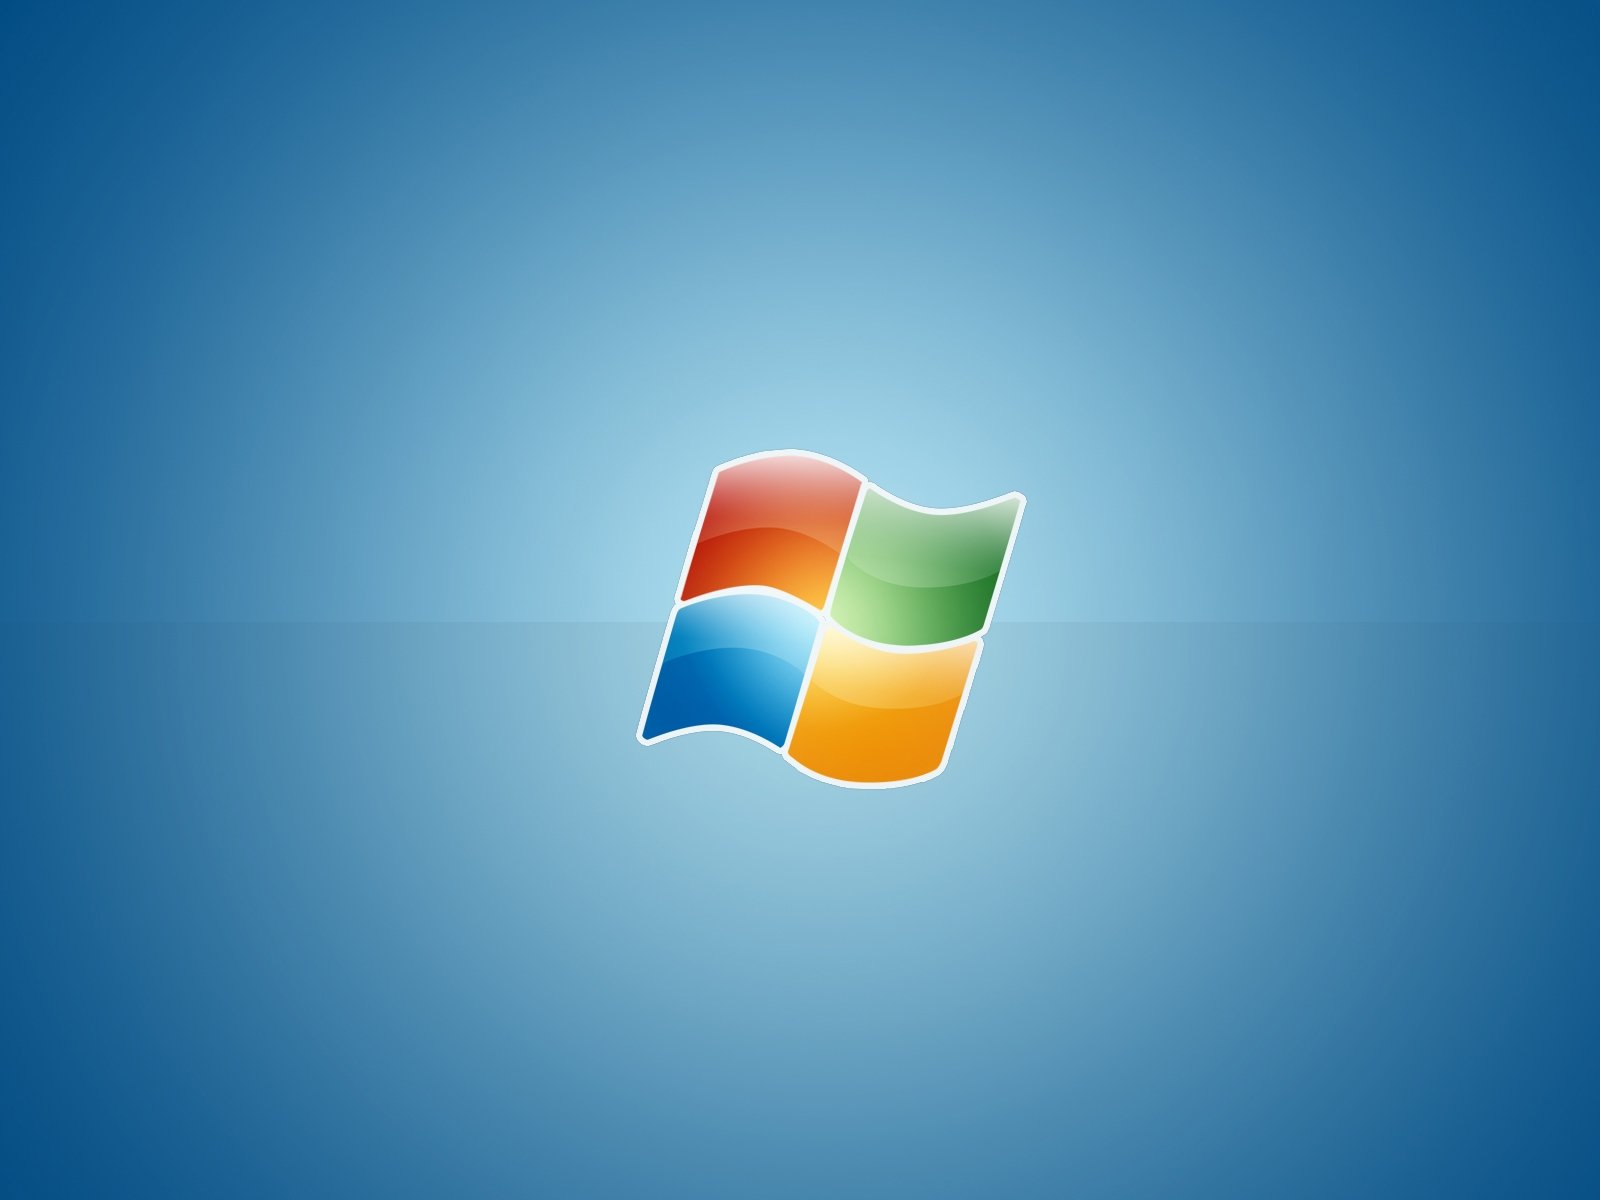 Hd 1600x1200 Big Windows Logo Desktop Wallpapers Backgrounds